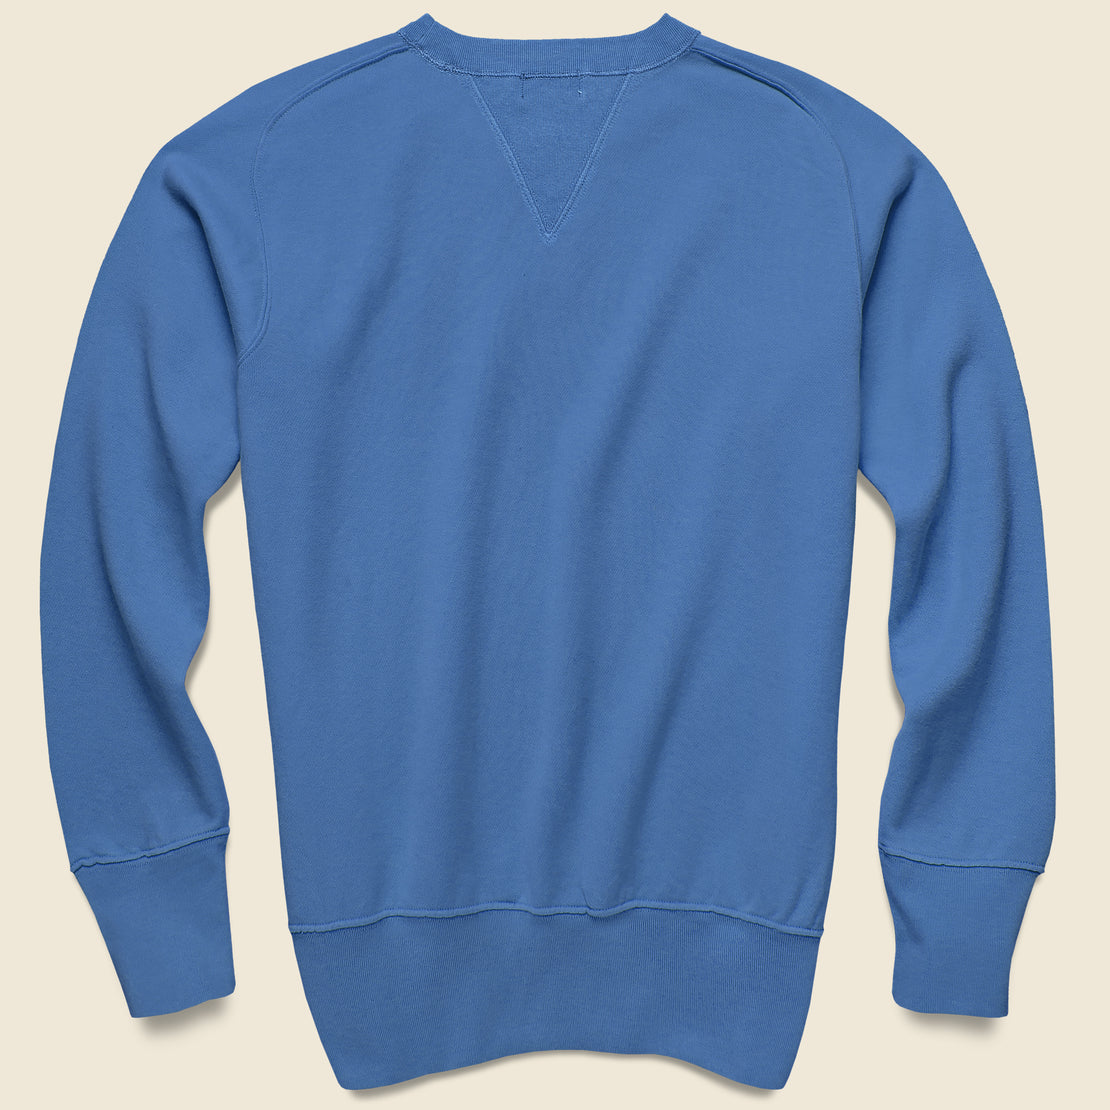 Bay Meadows Sweatshirt - Dark Blue - Levis Vintage Clothing - STAG Provisions - Tops - Fleece / Sweatshirt